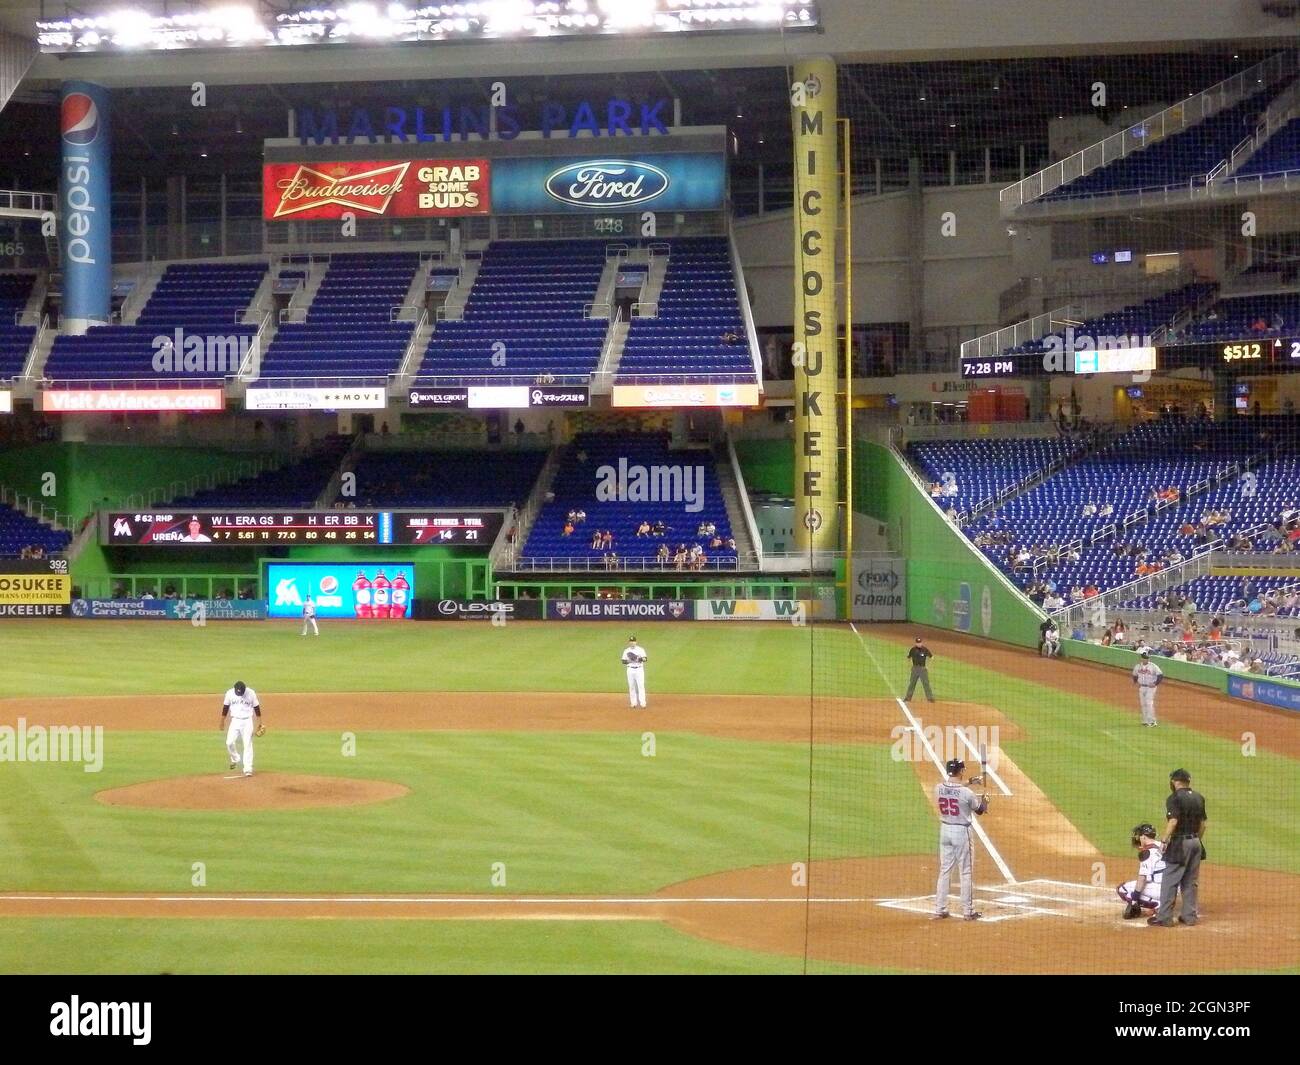 Marlins Park, home of the Miami Marlins, Major League baseball team, Miami Florida, United States Stock Photo